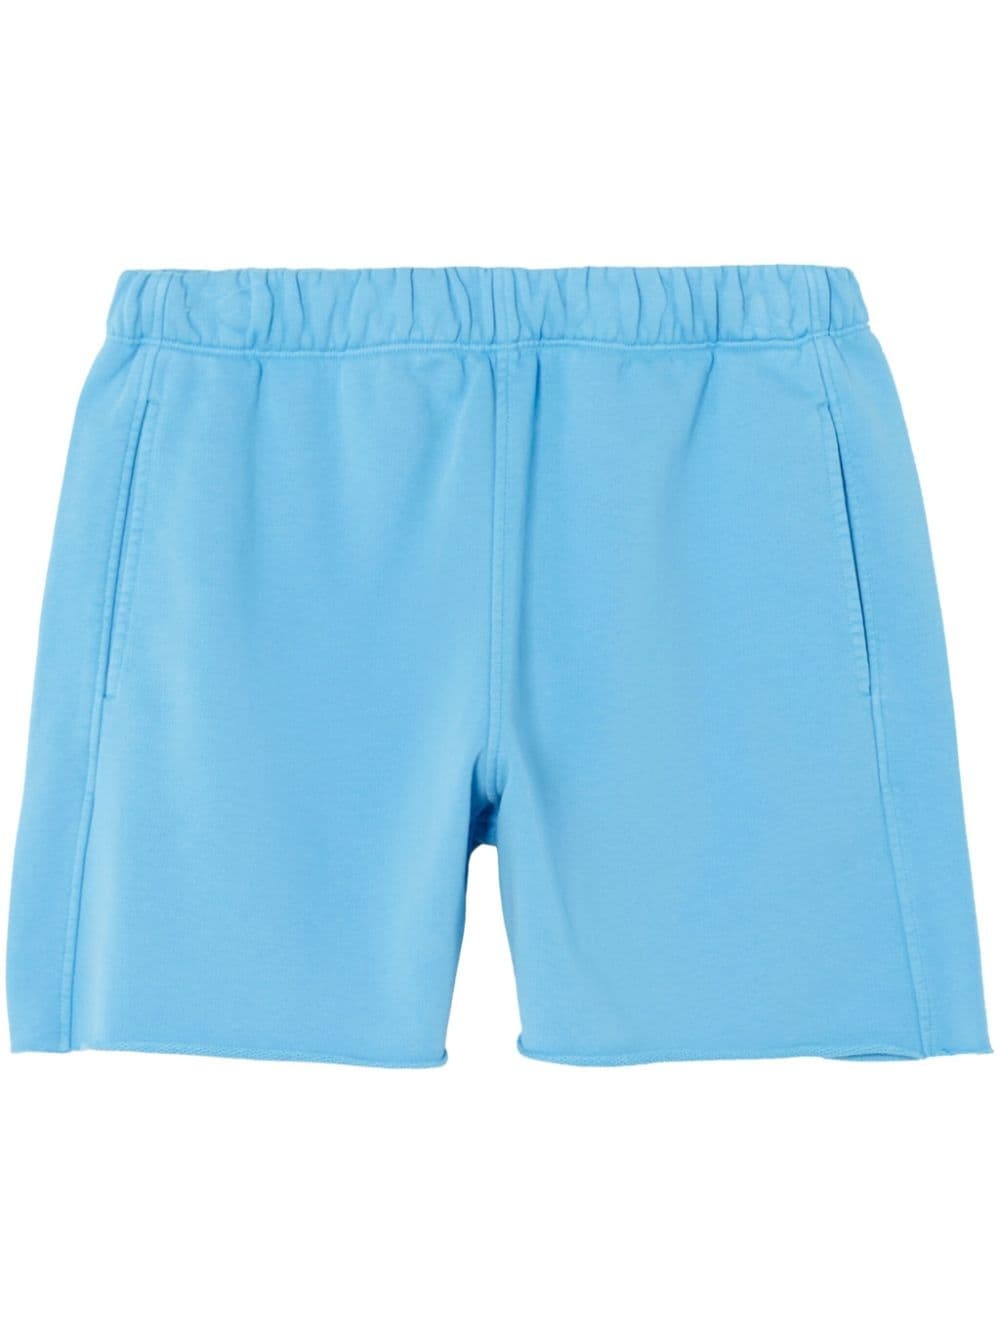 Boy cotton shorts - 1